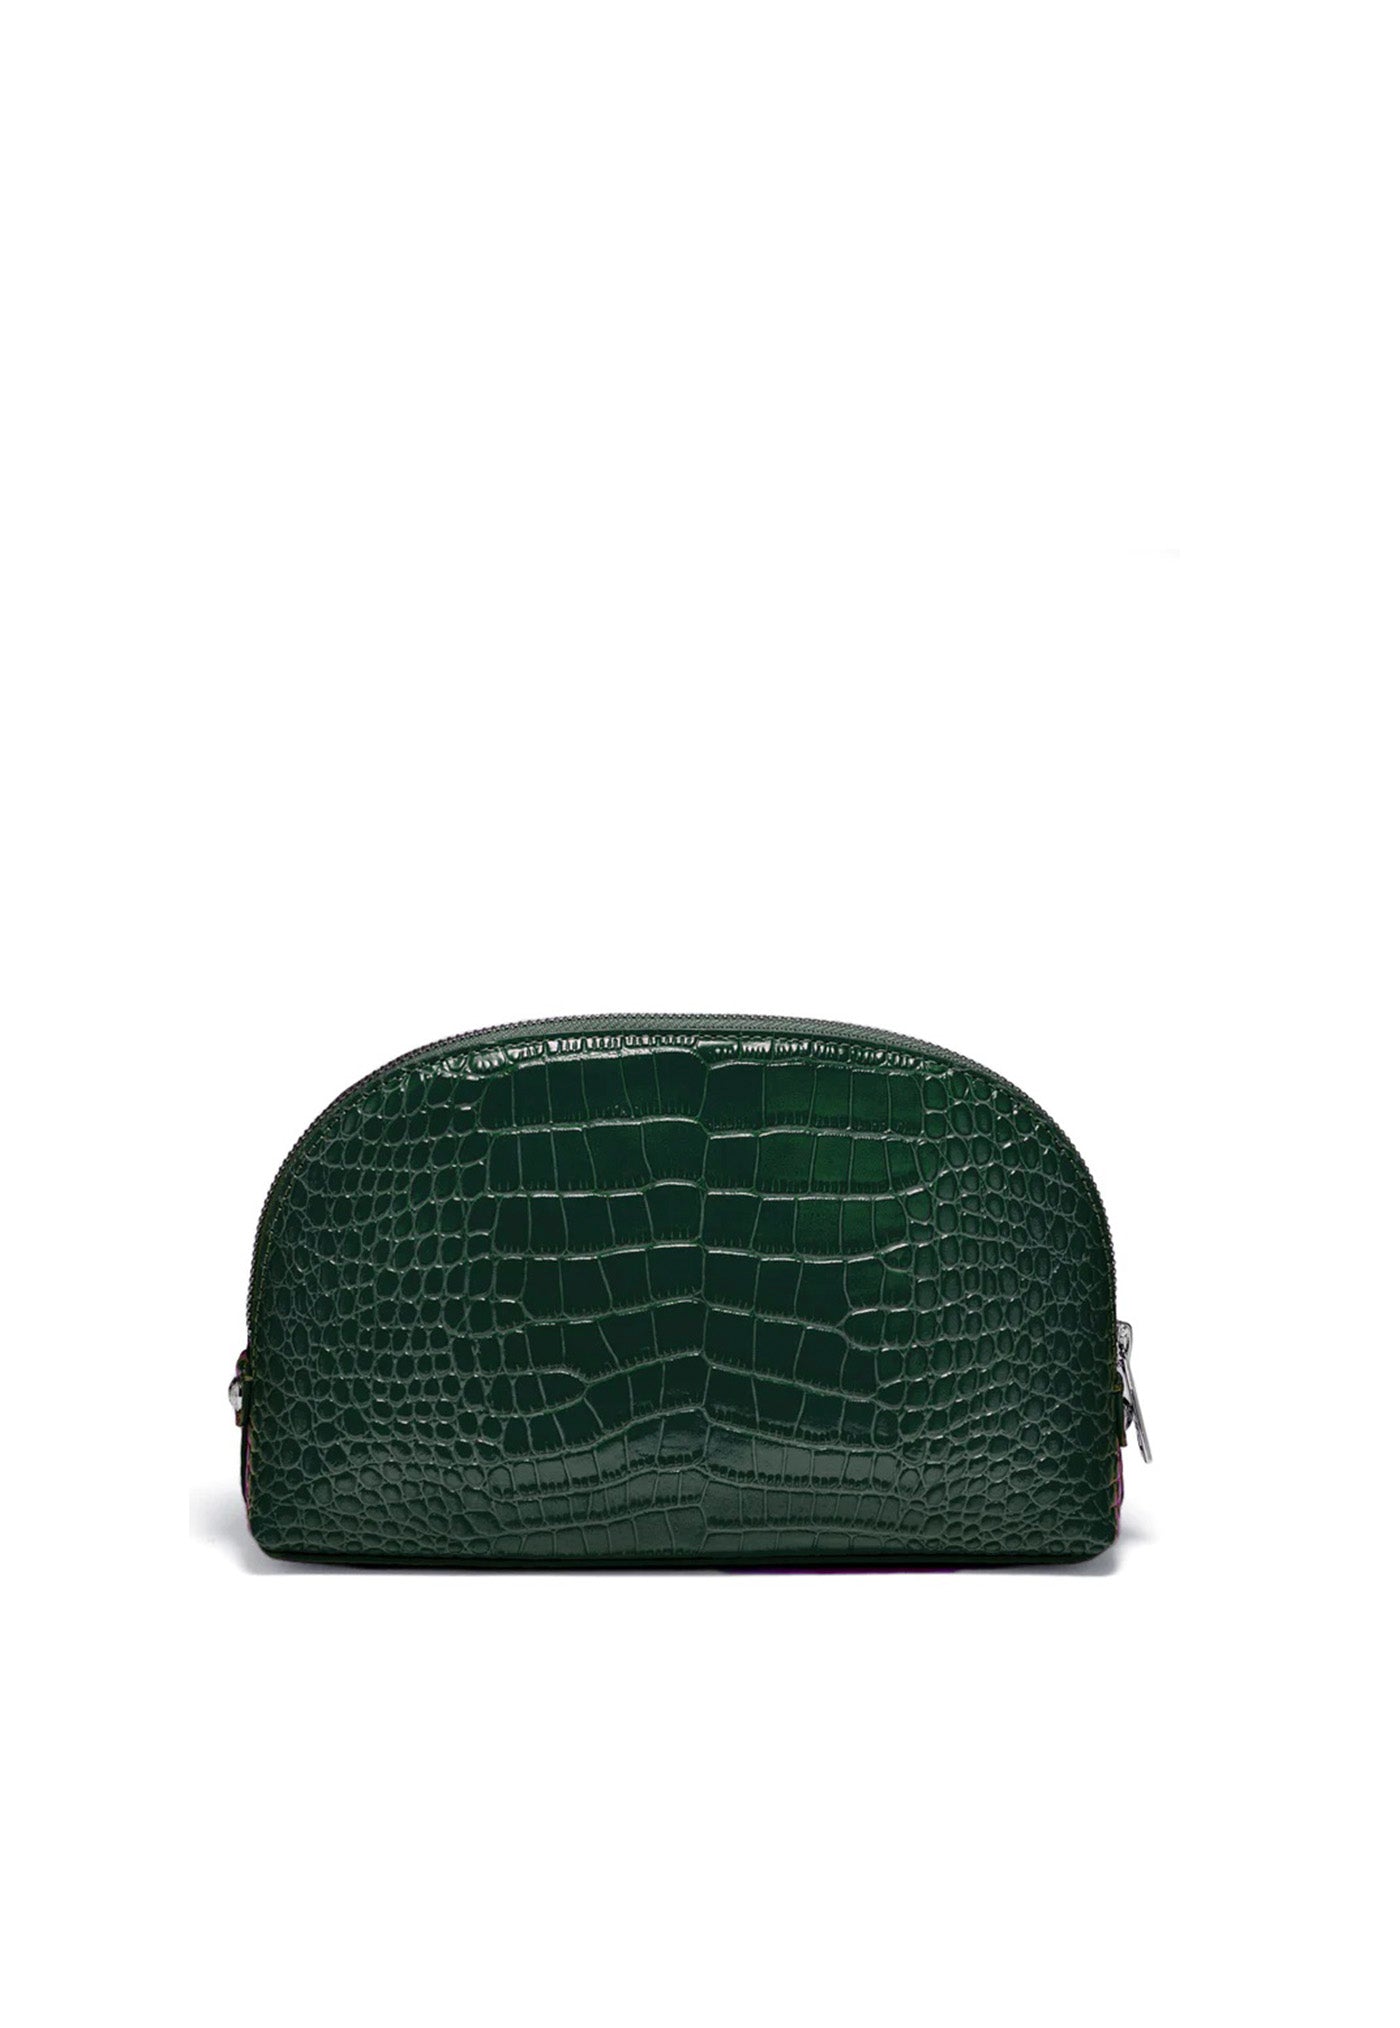 Chelsea Makeup Bag - Emerald Croc sold by Angel Divine